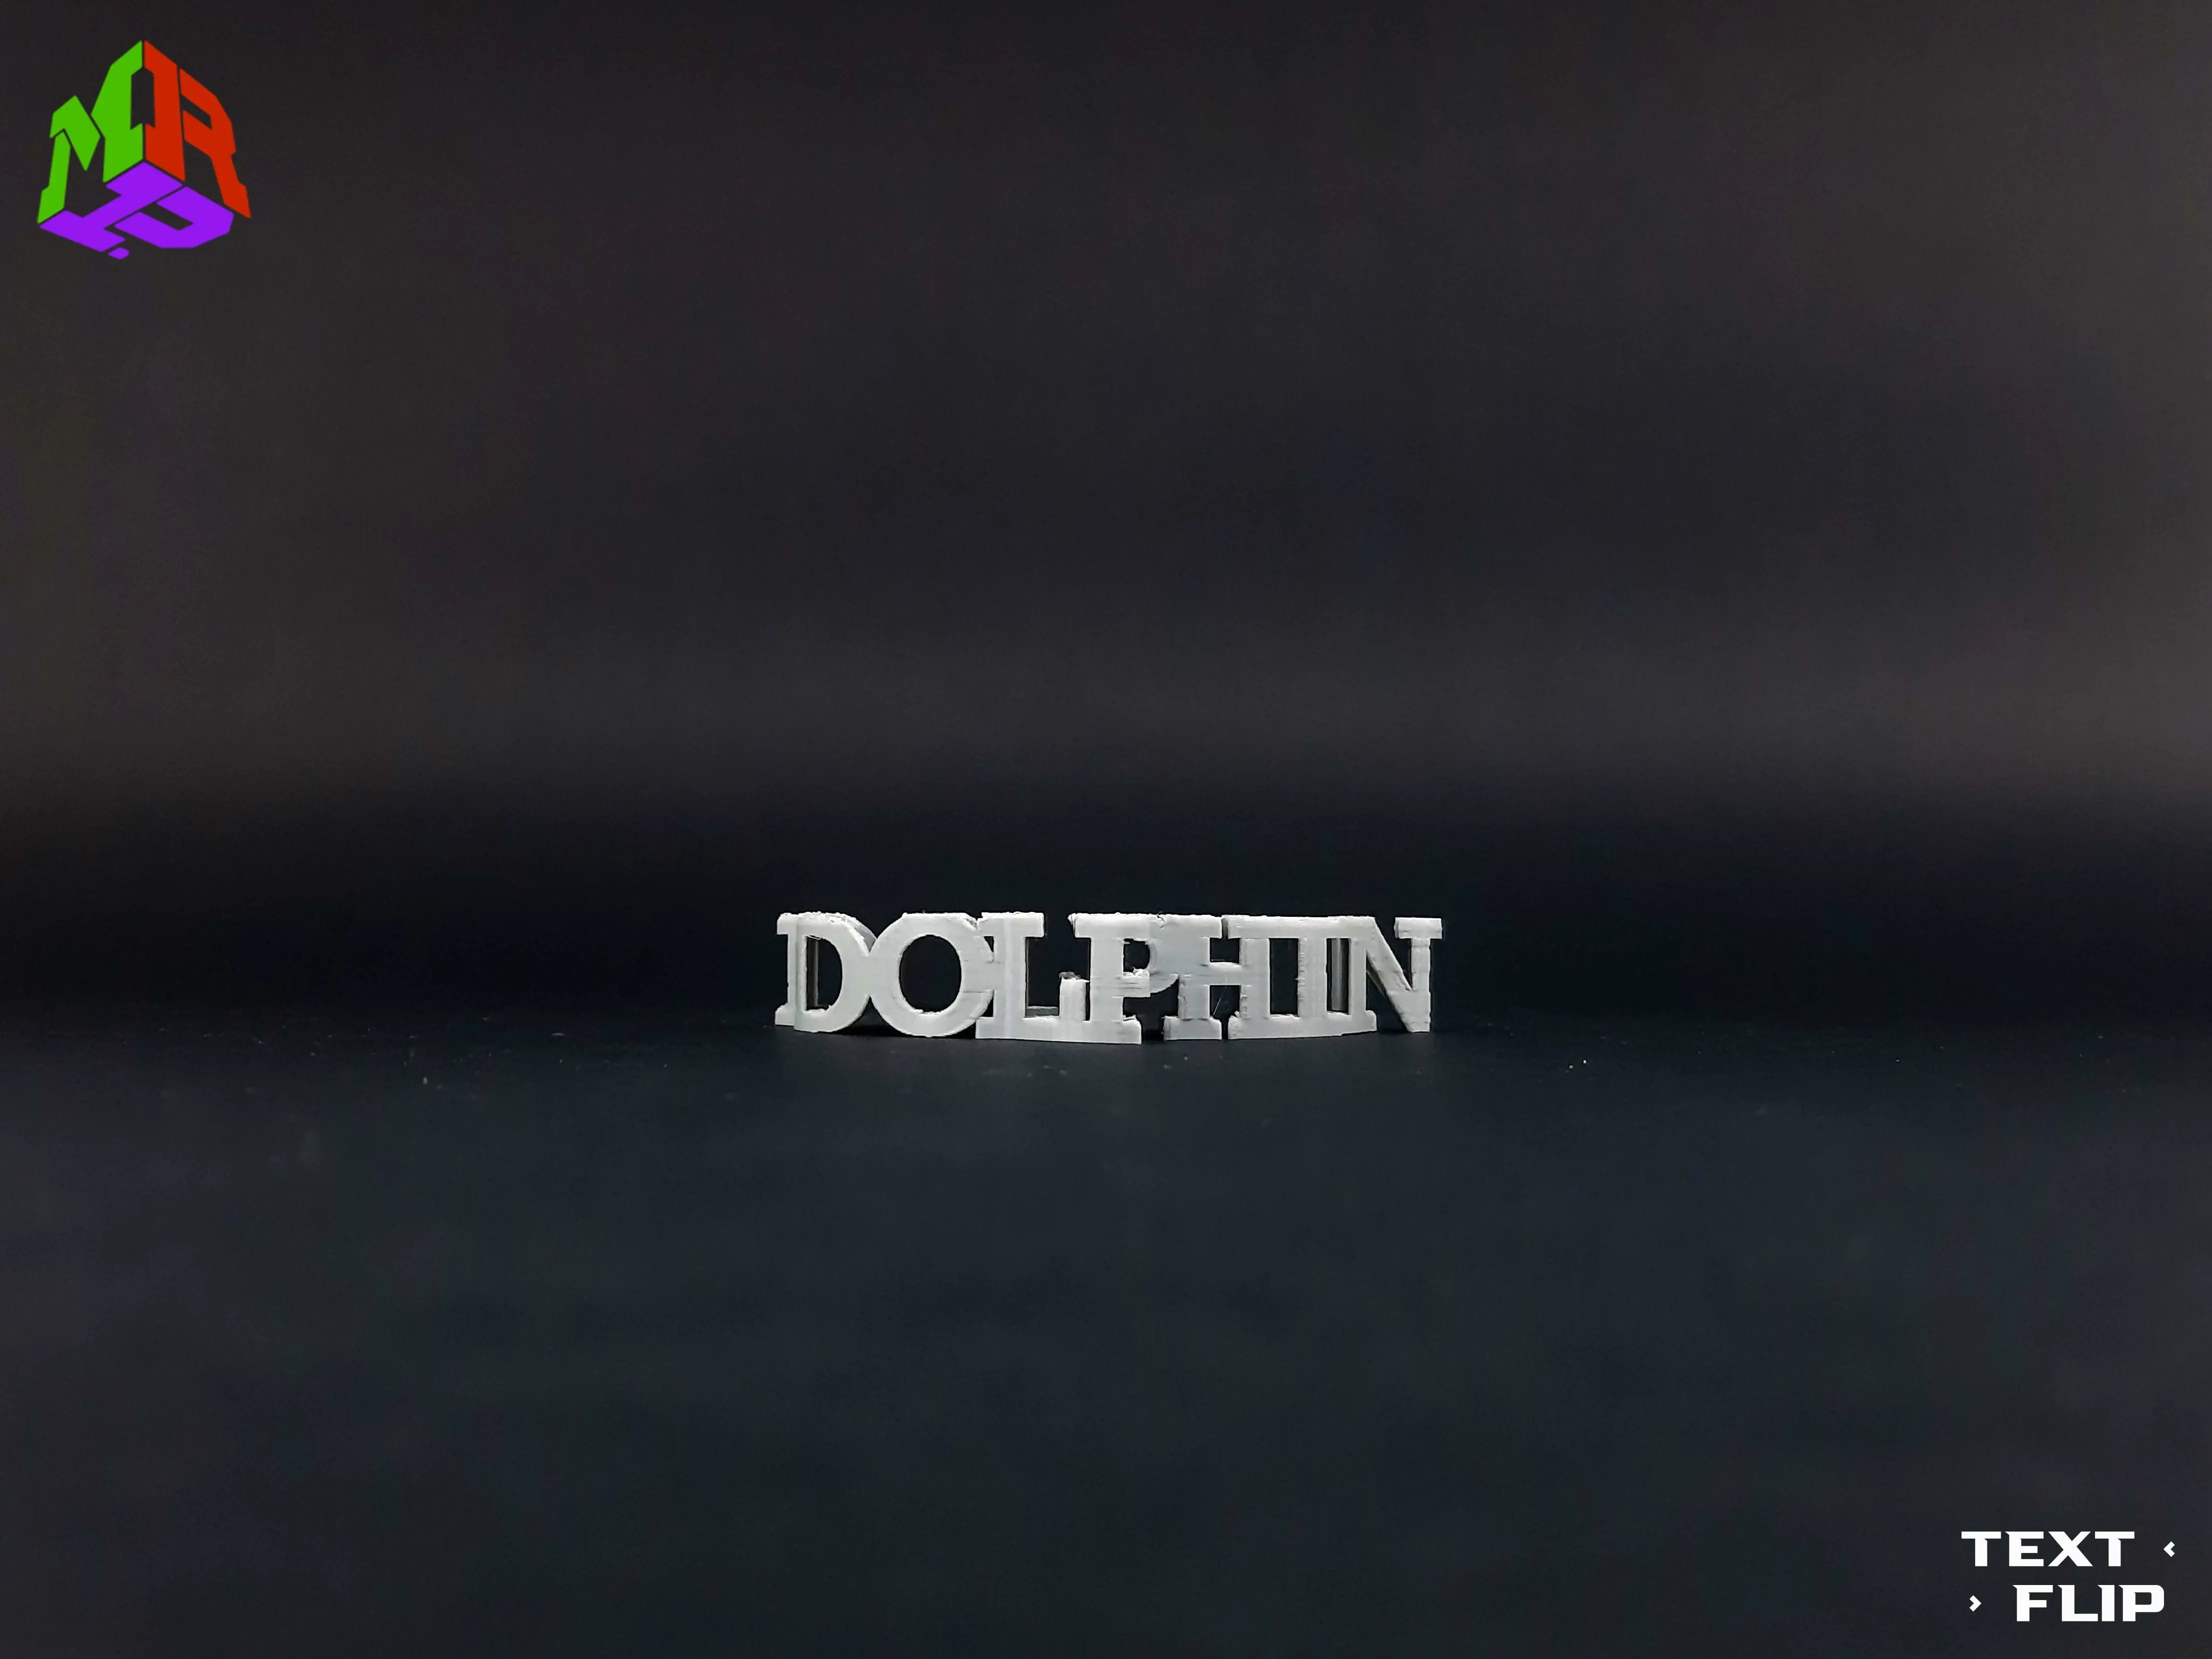 Text Flip - Dolphin